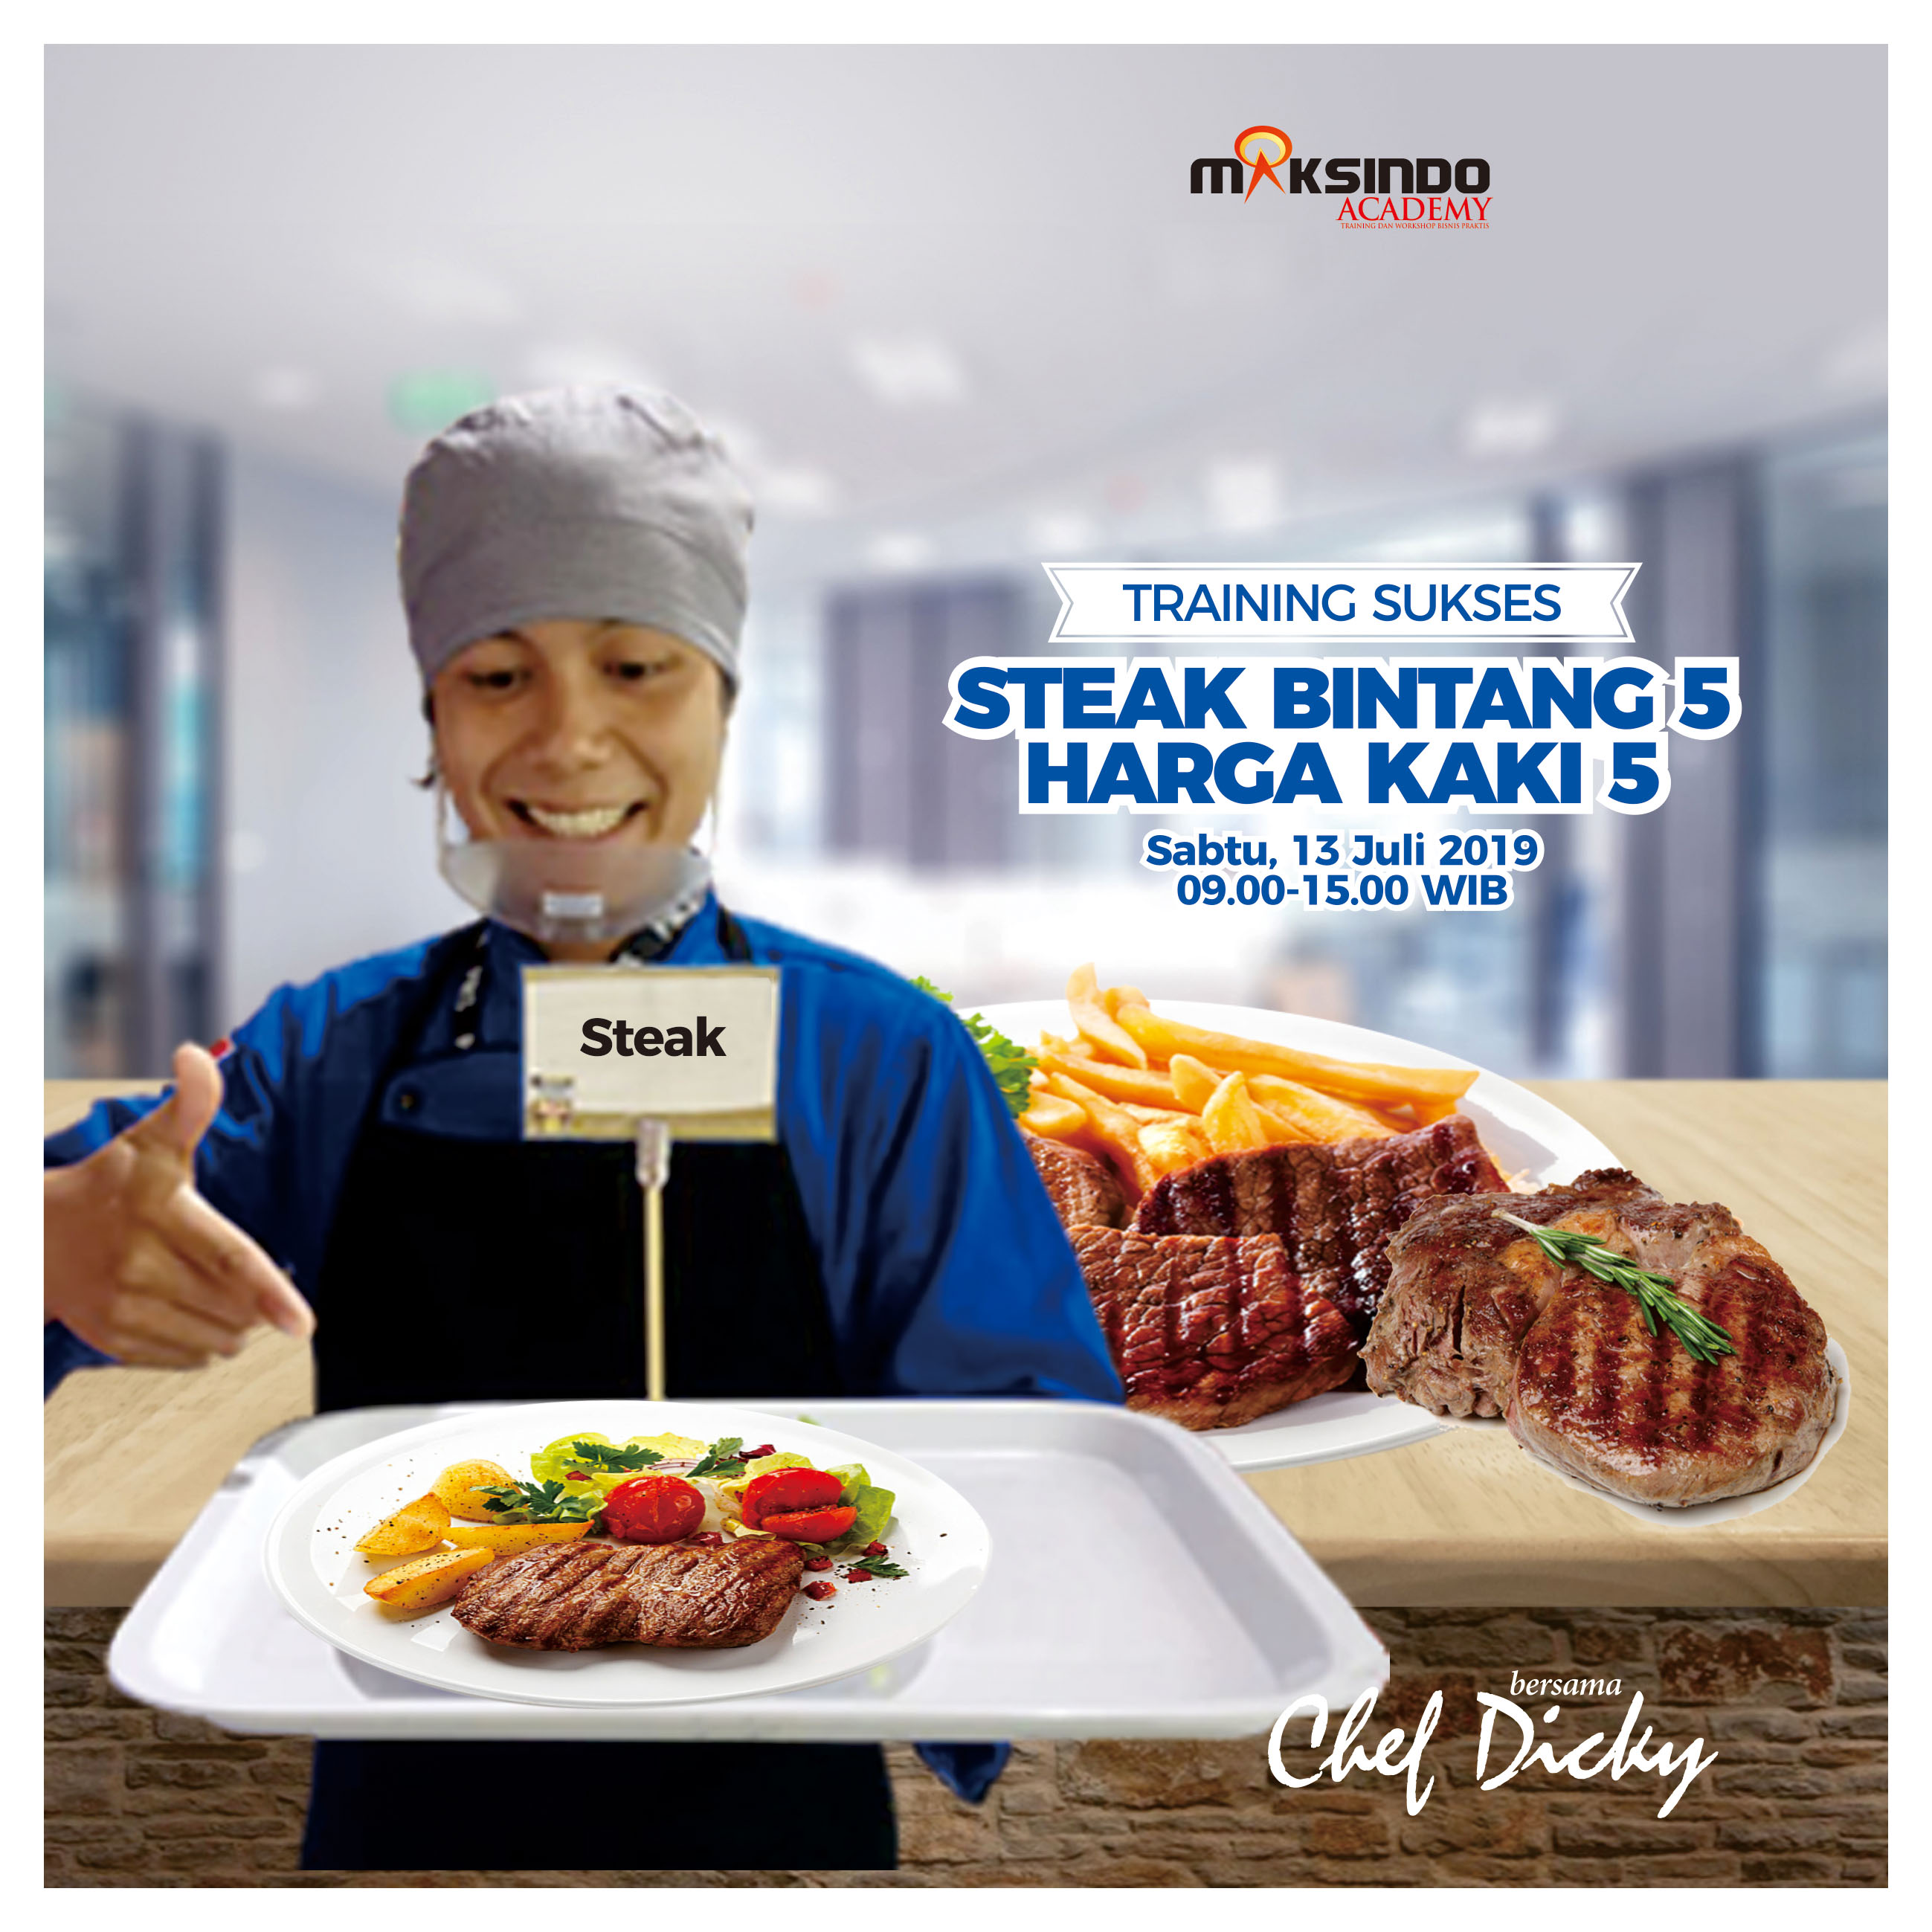 Training Sukses Steak Bintang 5 Harga Kaki 5, Sabtu 13 Juli 2019